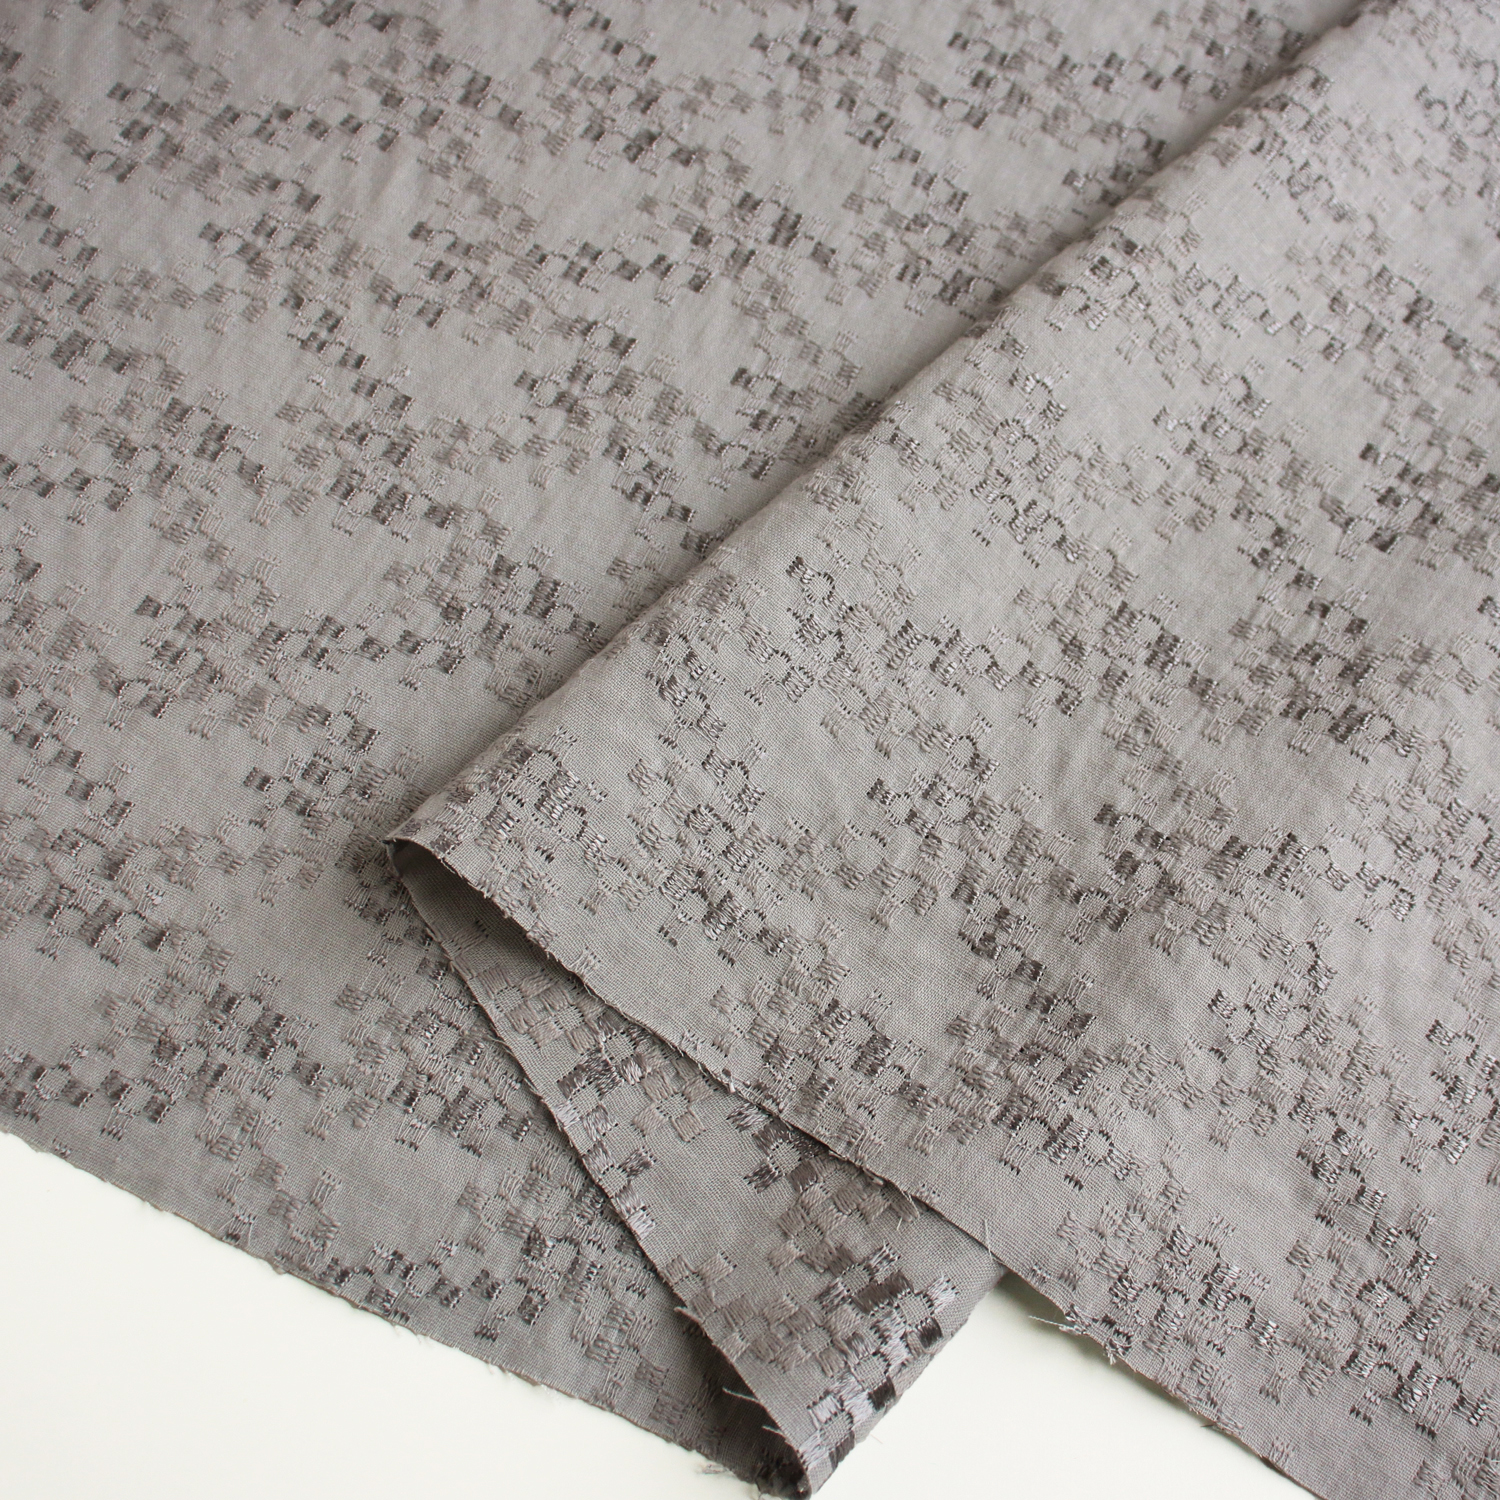 AL566R-5095 cotton lace fabric, Width 100cm, 〇m roll (roll)